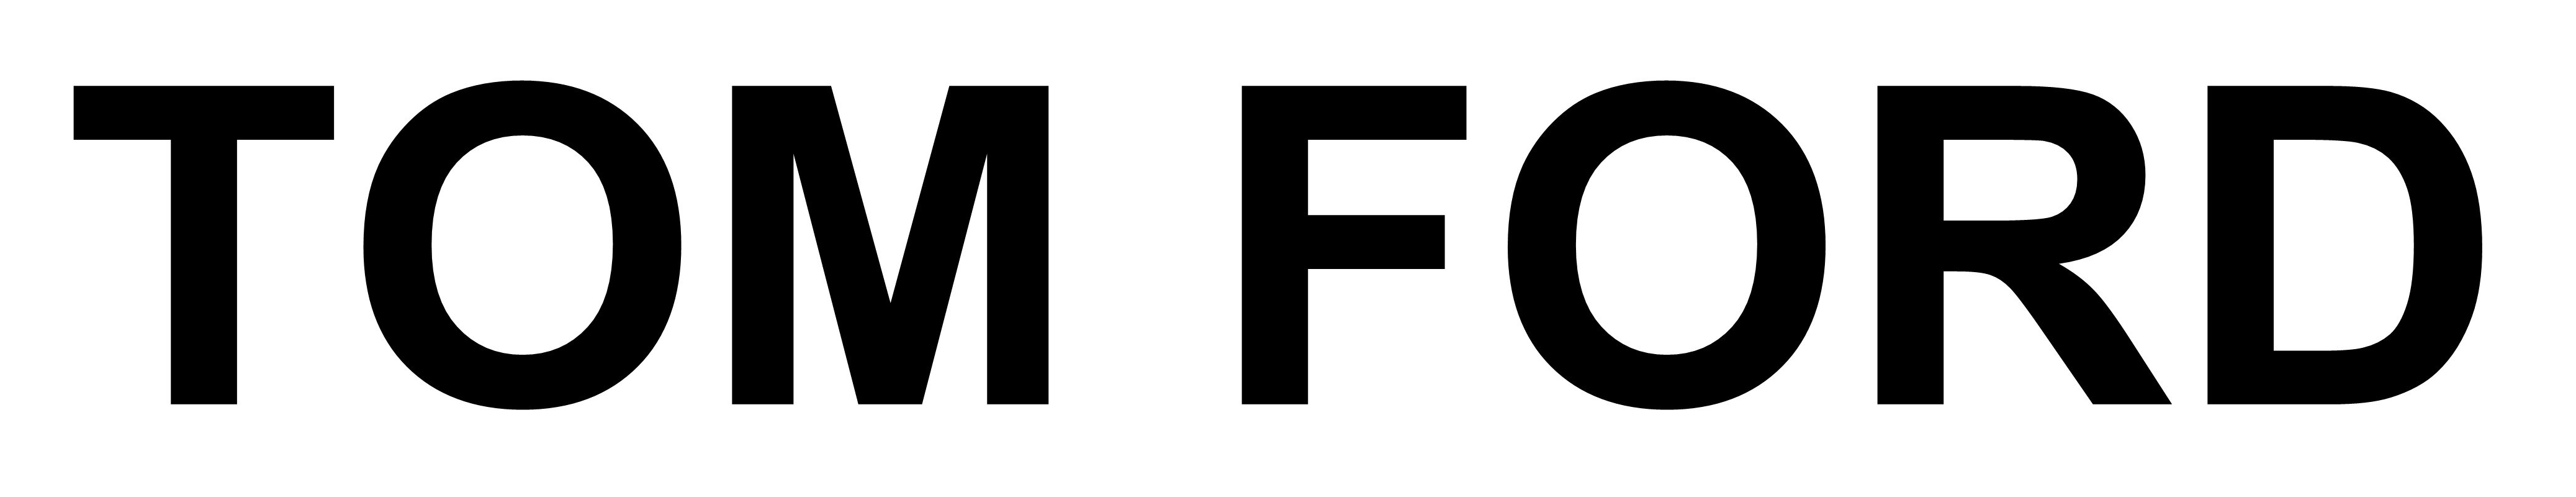 Tom Ford Logo - Tom Ford – Logos Download